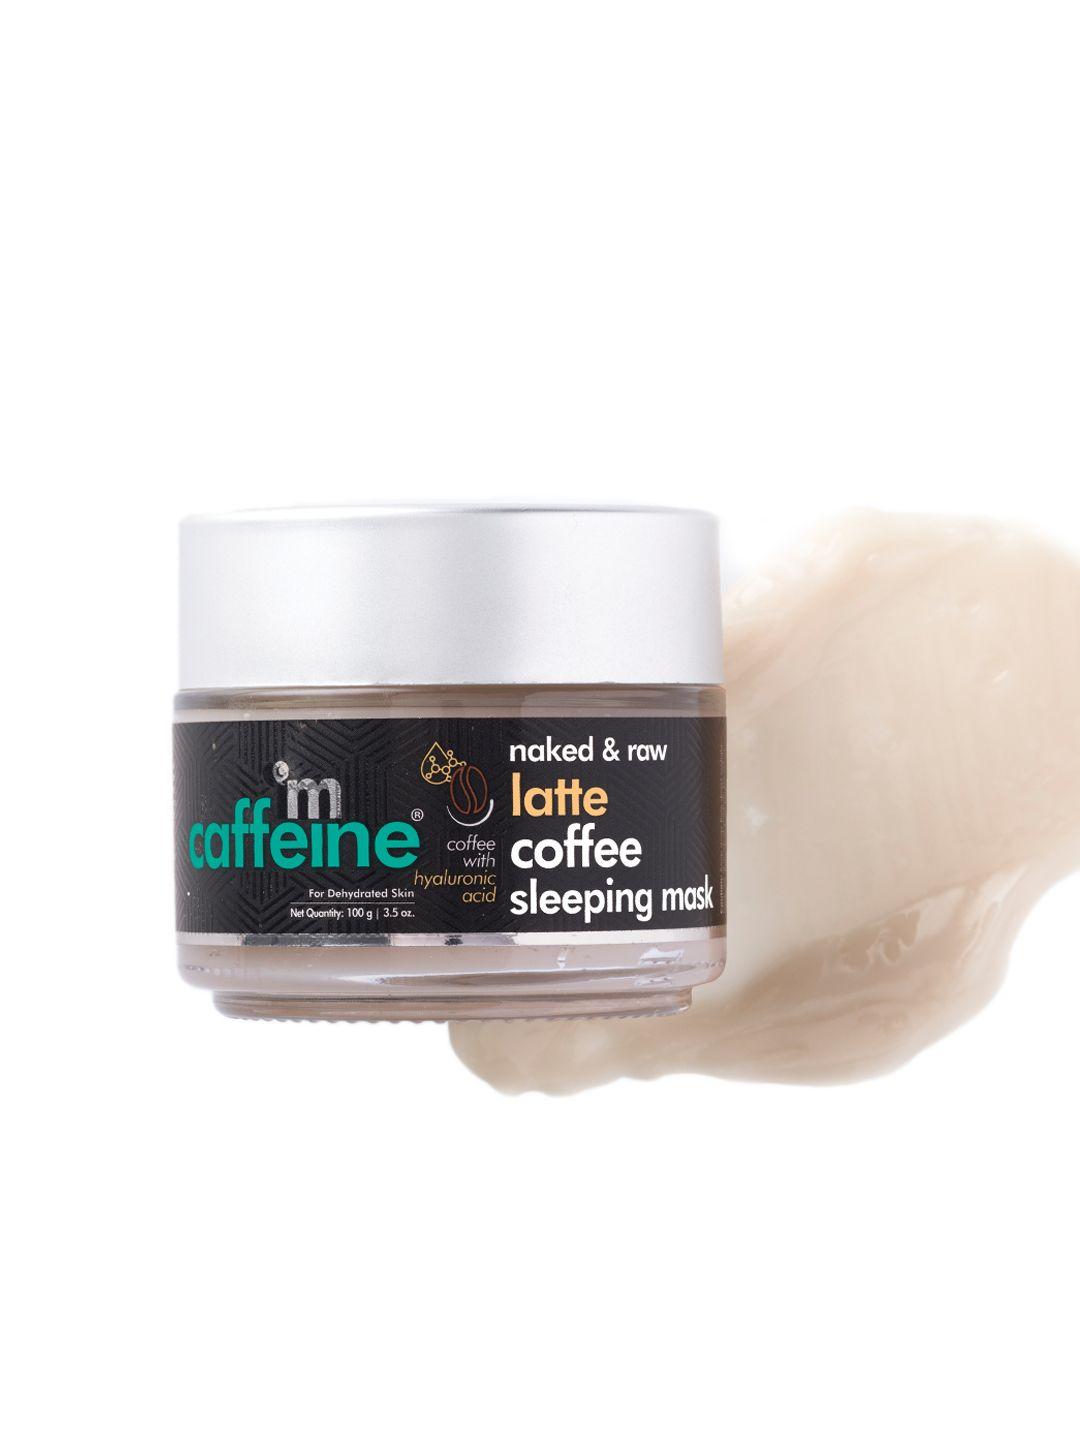 mcaffeine de-stressing latte coffee sleep mask with hyaluronic acid & niacinamide 100g